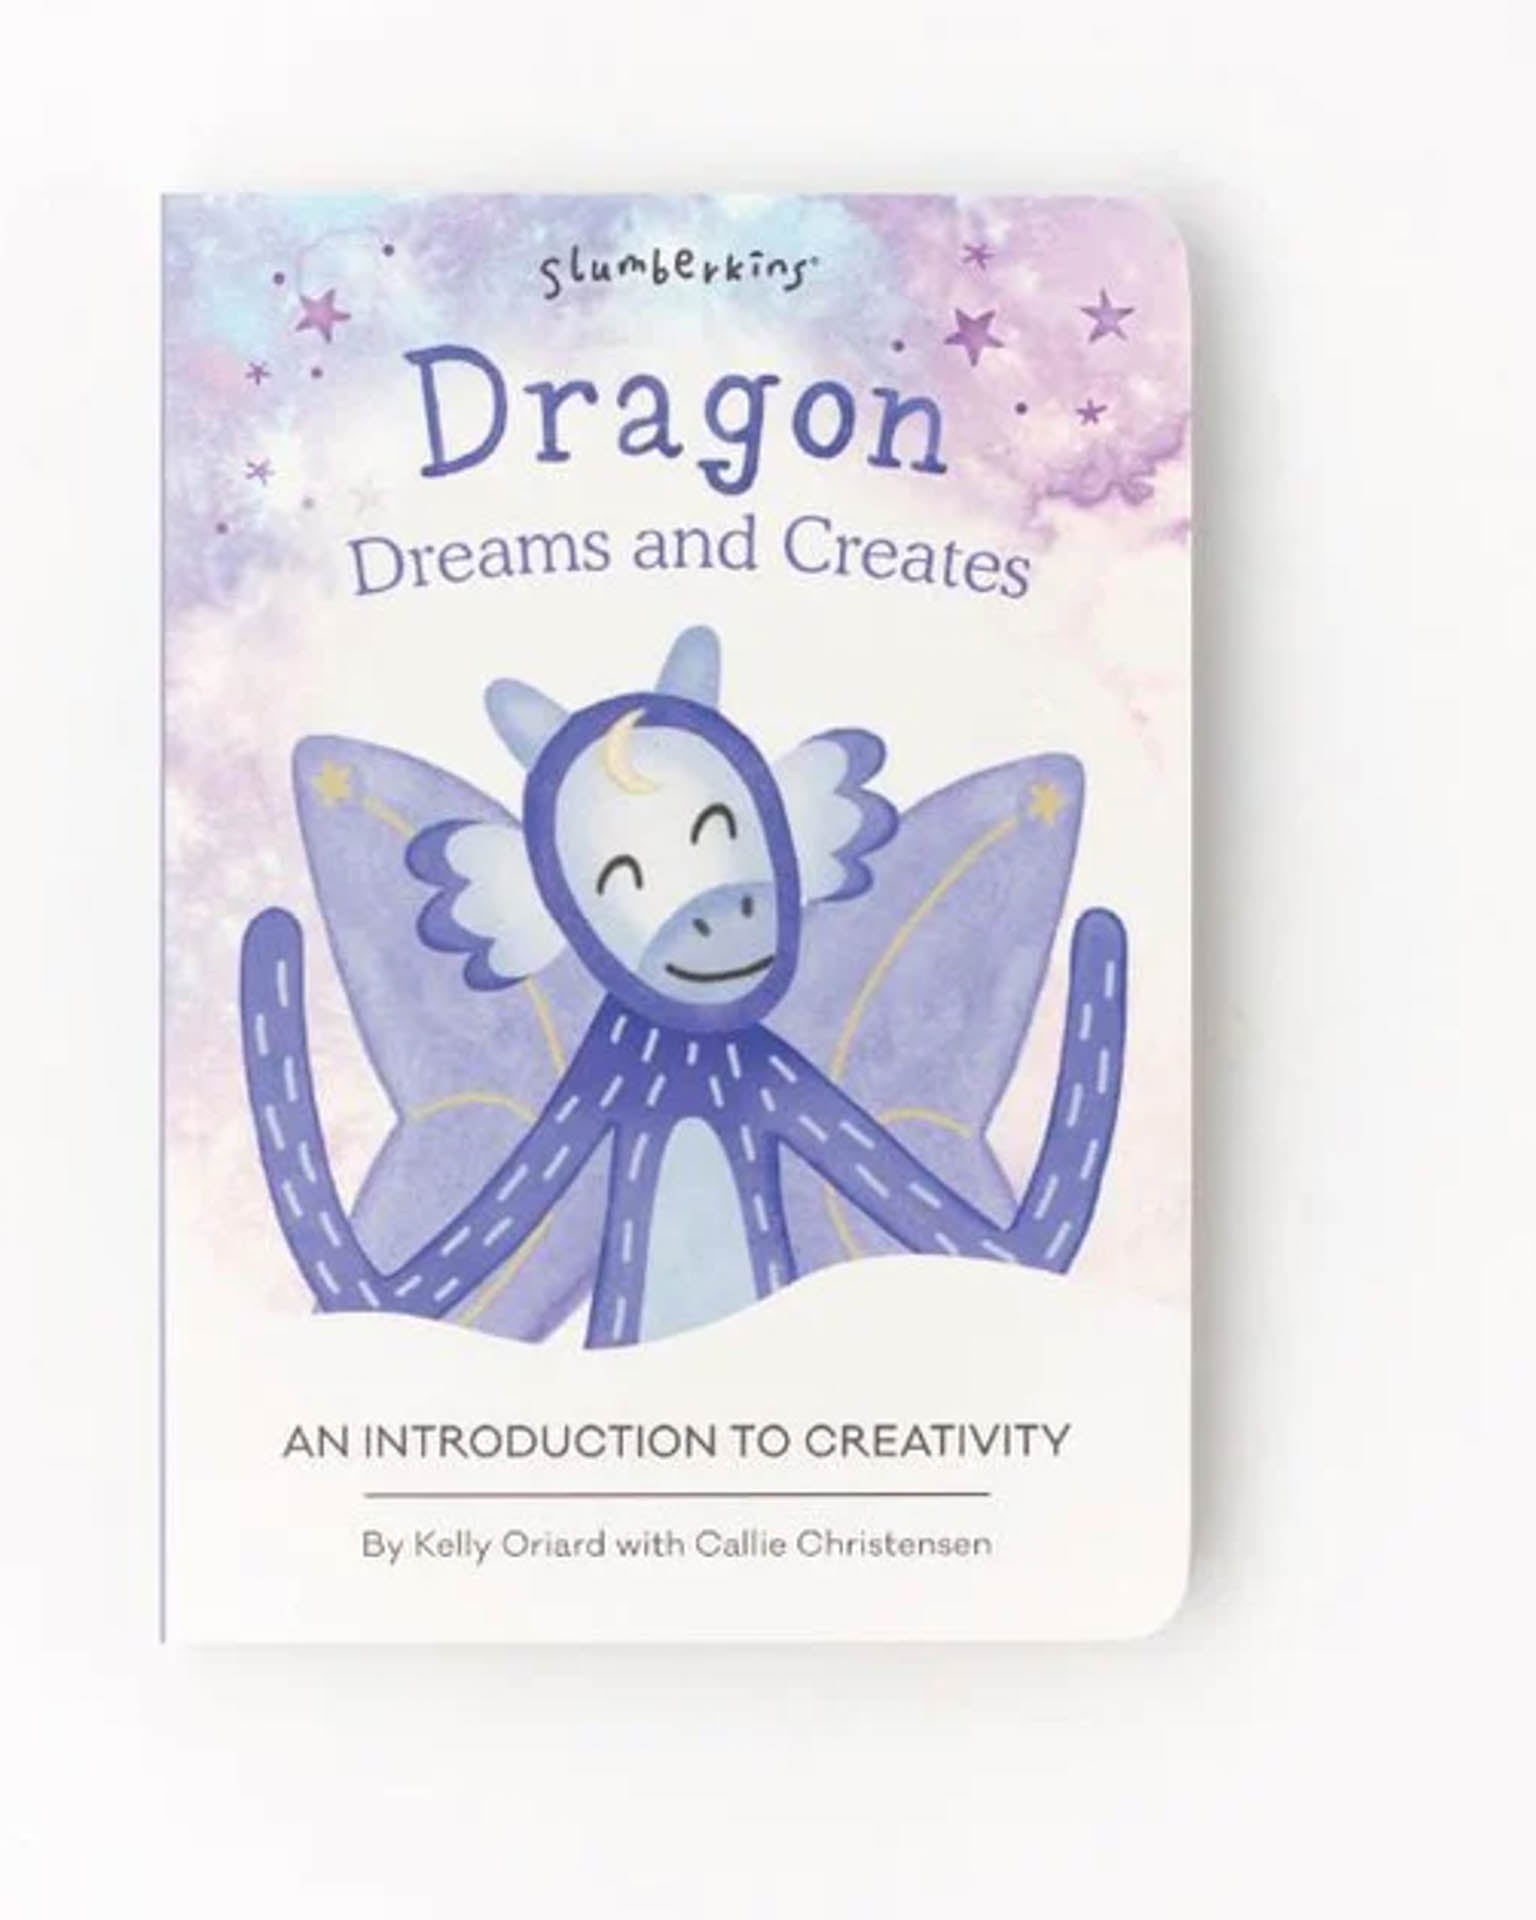 Little slumberkins play dragon dreams + creates book